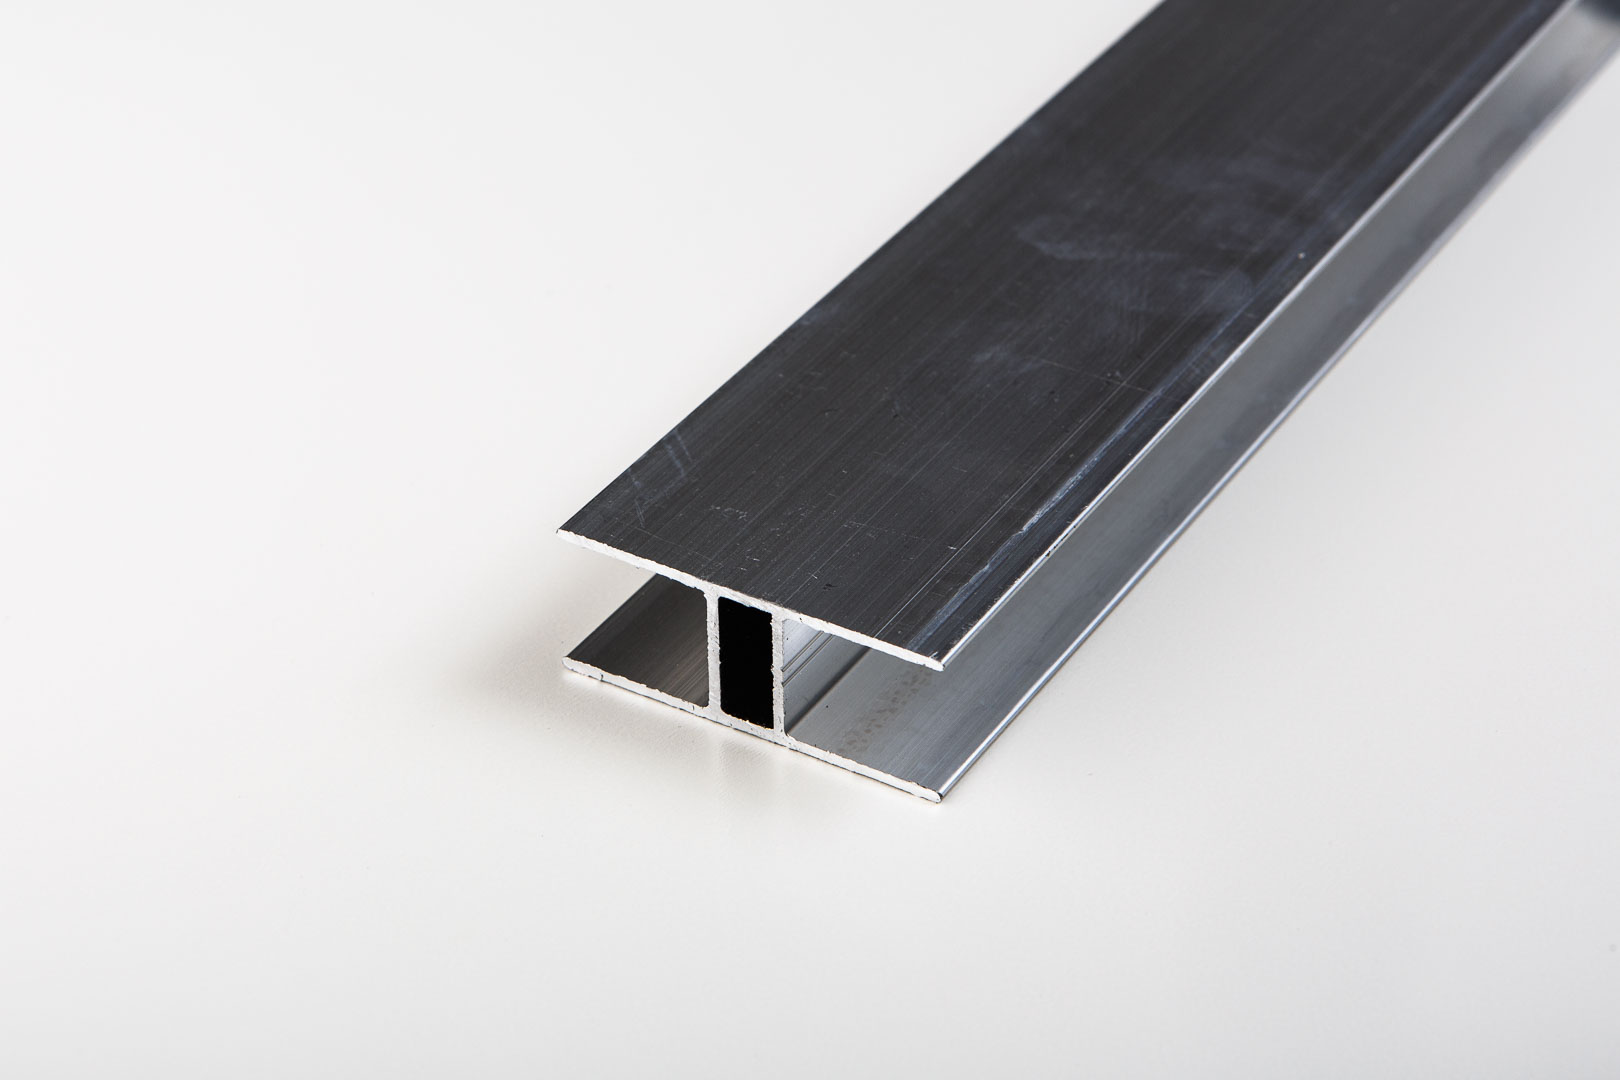 Aluminium H-Profil für Stegplatten